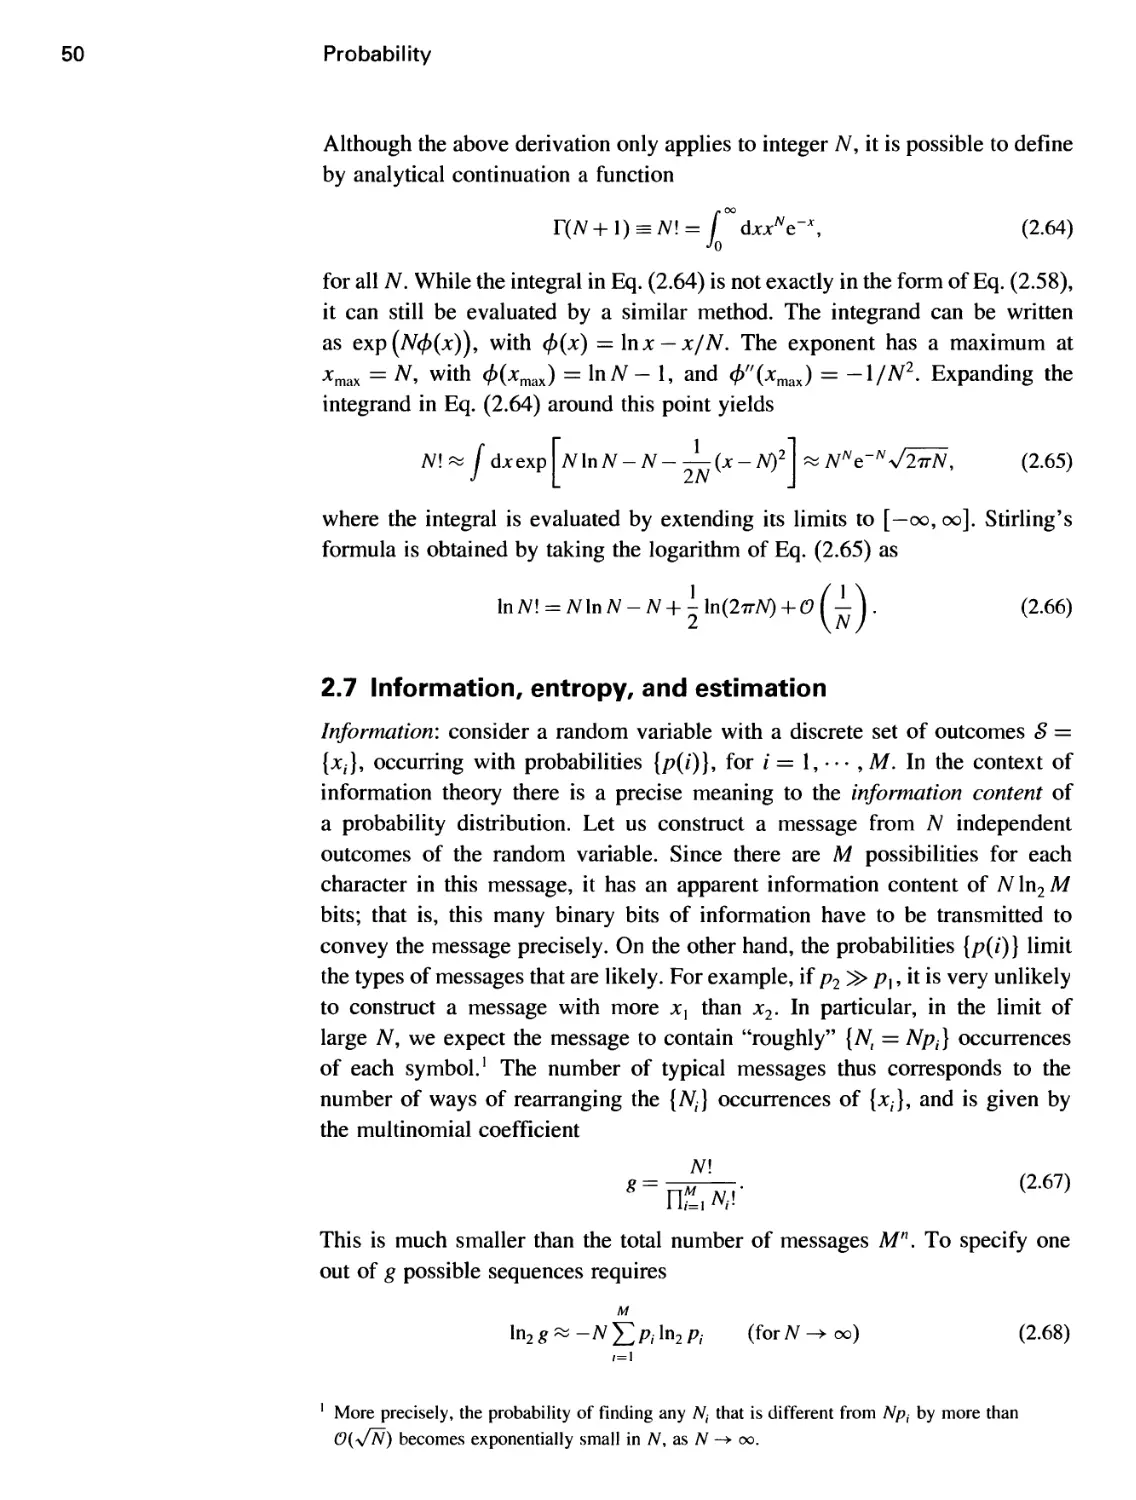 2.7 Information, entropy, and estimation